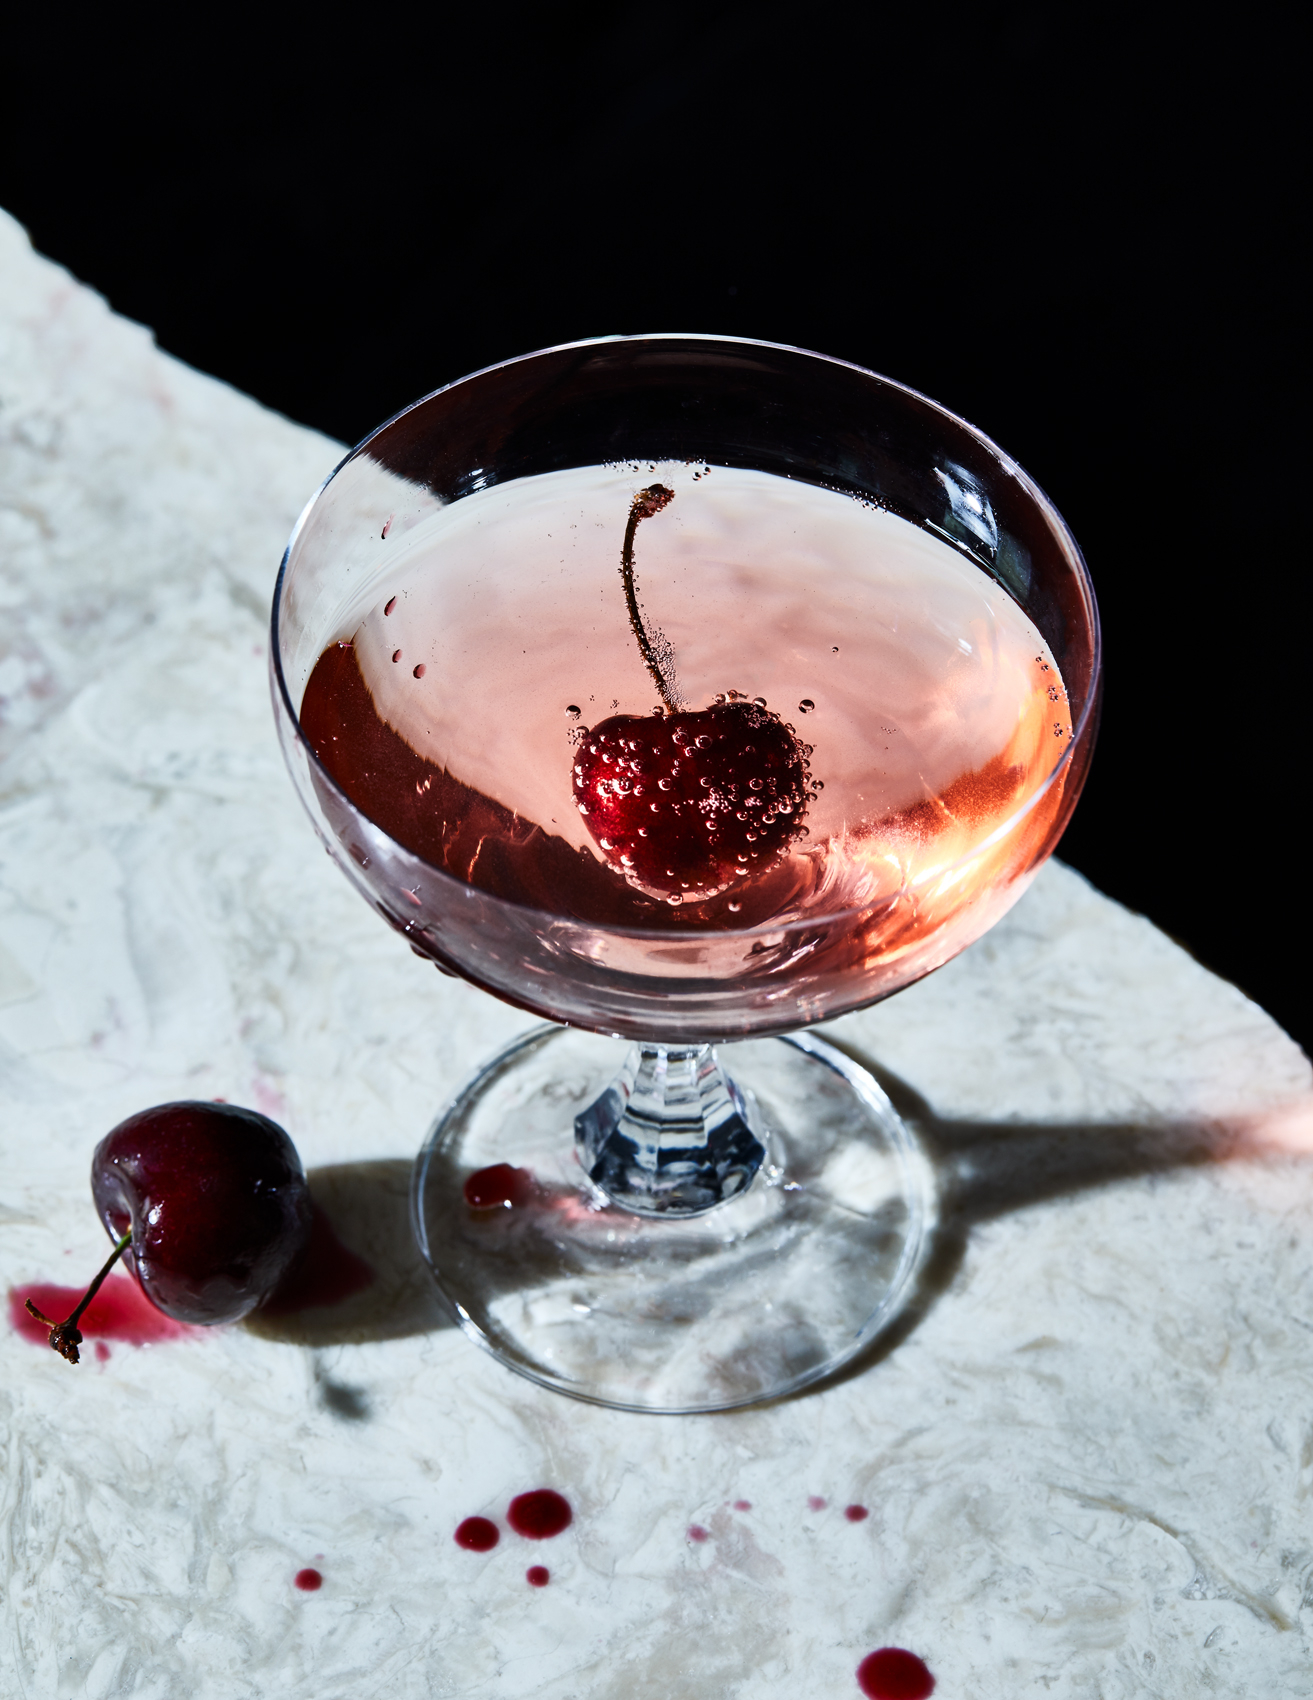 Burgundy cherry juice decorates marbled white surface